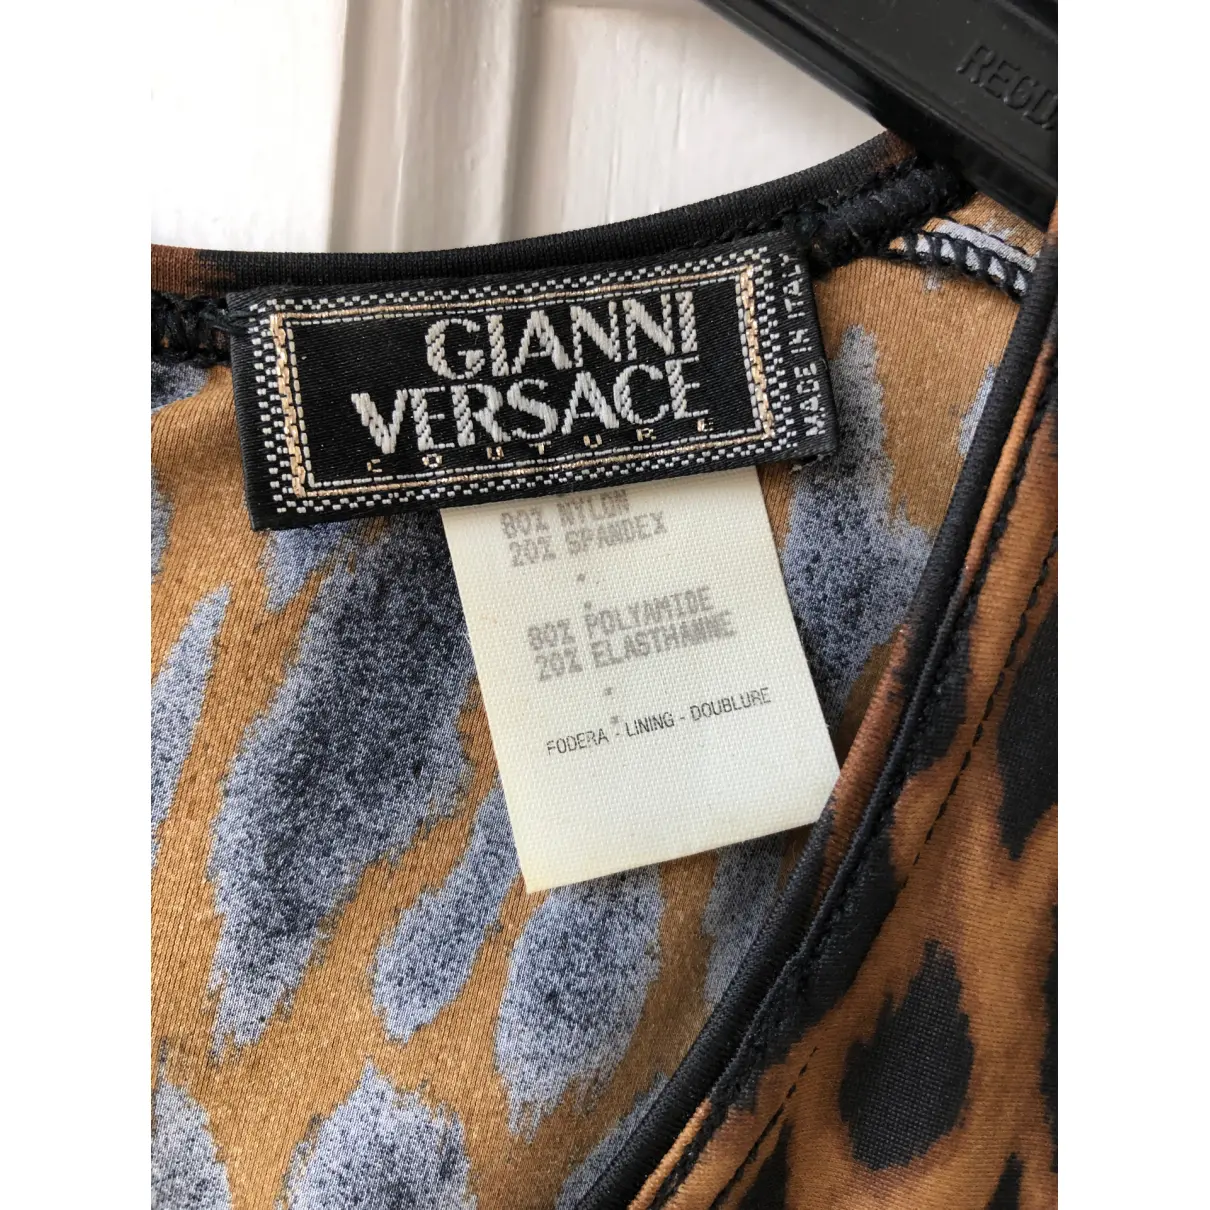 Top Gianni Versace - Vintage